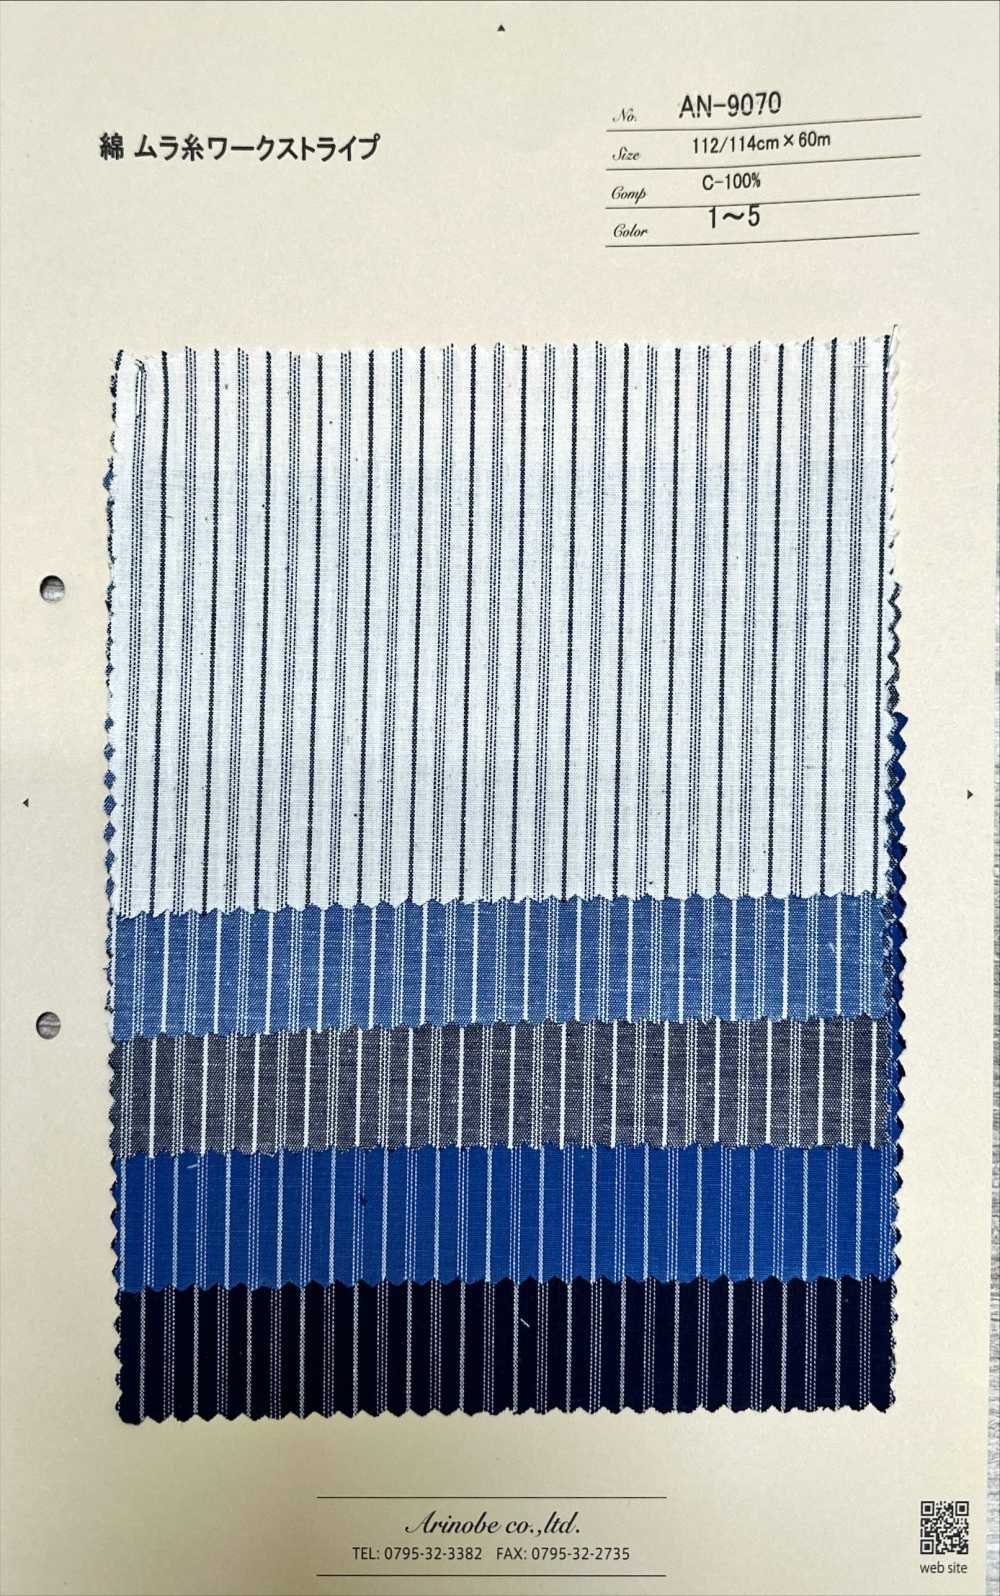 AN-9070 Raya De Trabajo De Hilo Desigual De Algodón[Fabrica Textil] ARINOBE CO., LTD.